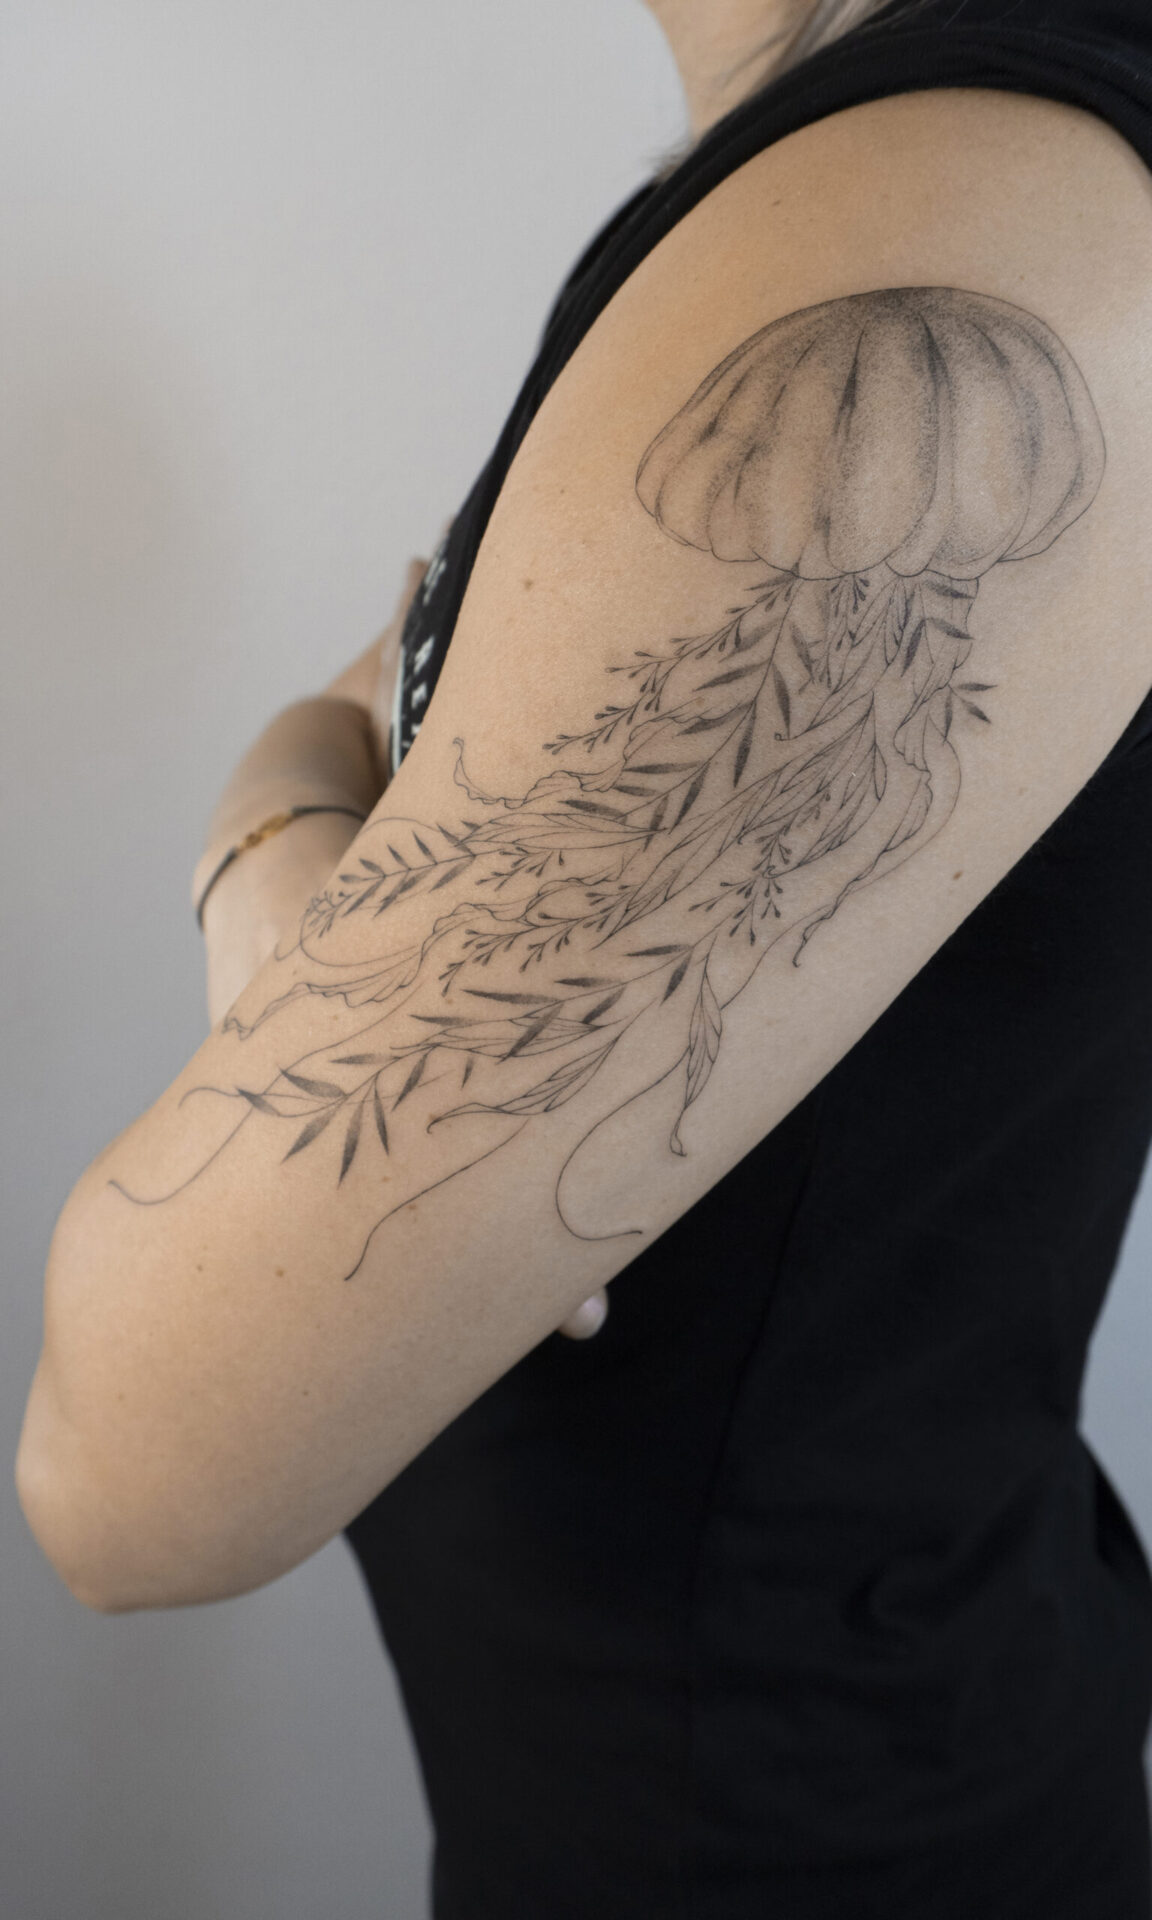 upper arm fineline jellyfish tattoo from smasli ink an female tattoo artist working in salzburg austria